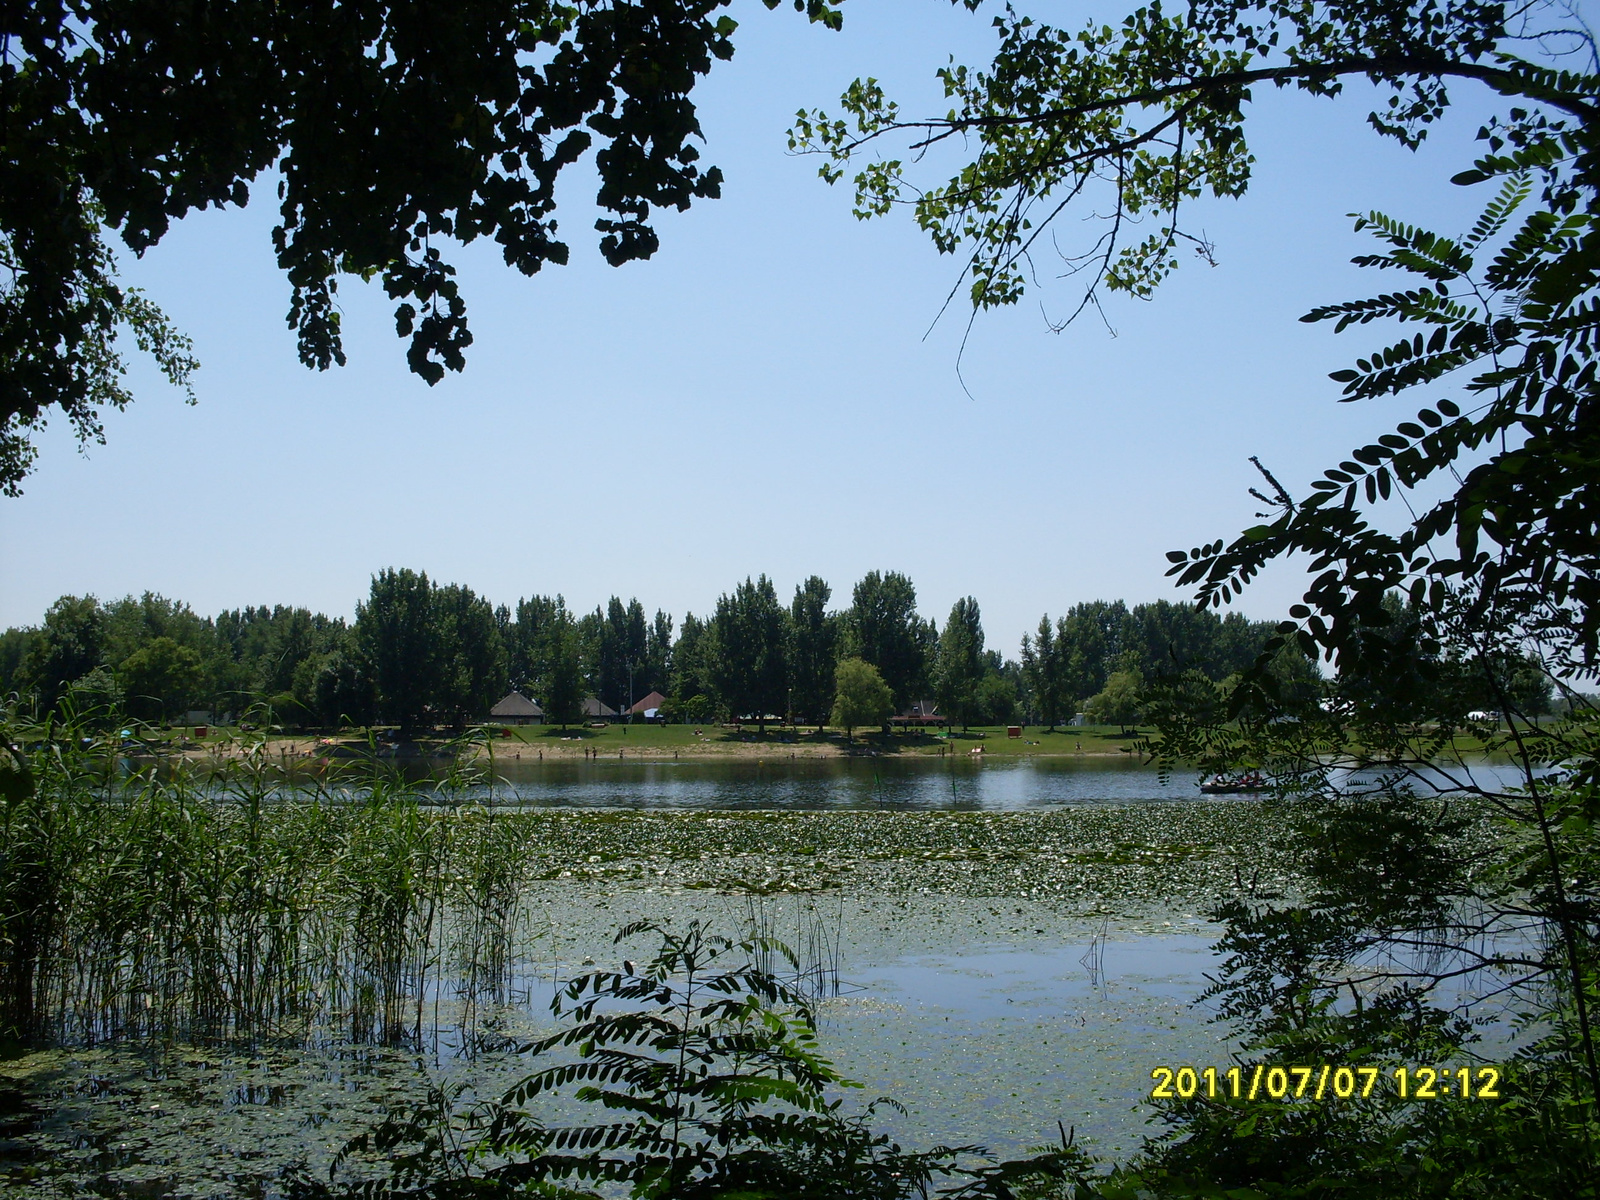 2011 jul 07 Tiszafüred Kalandpark 183